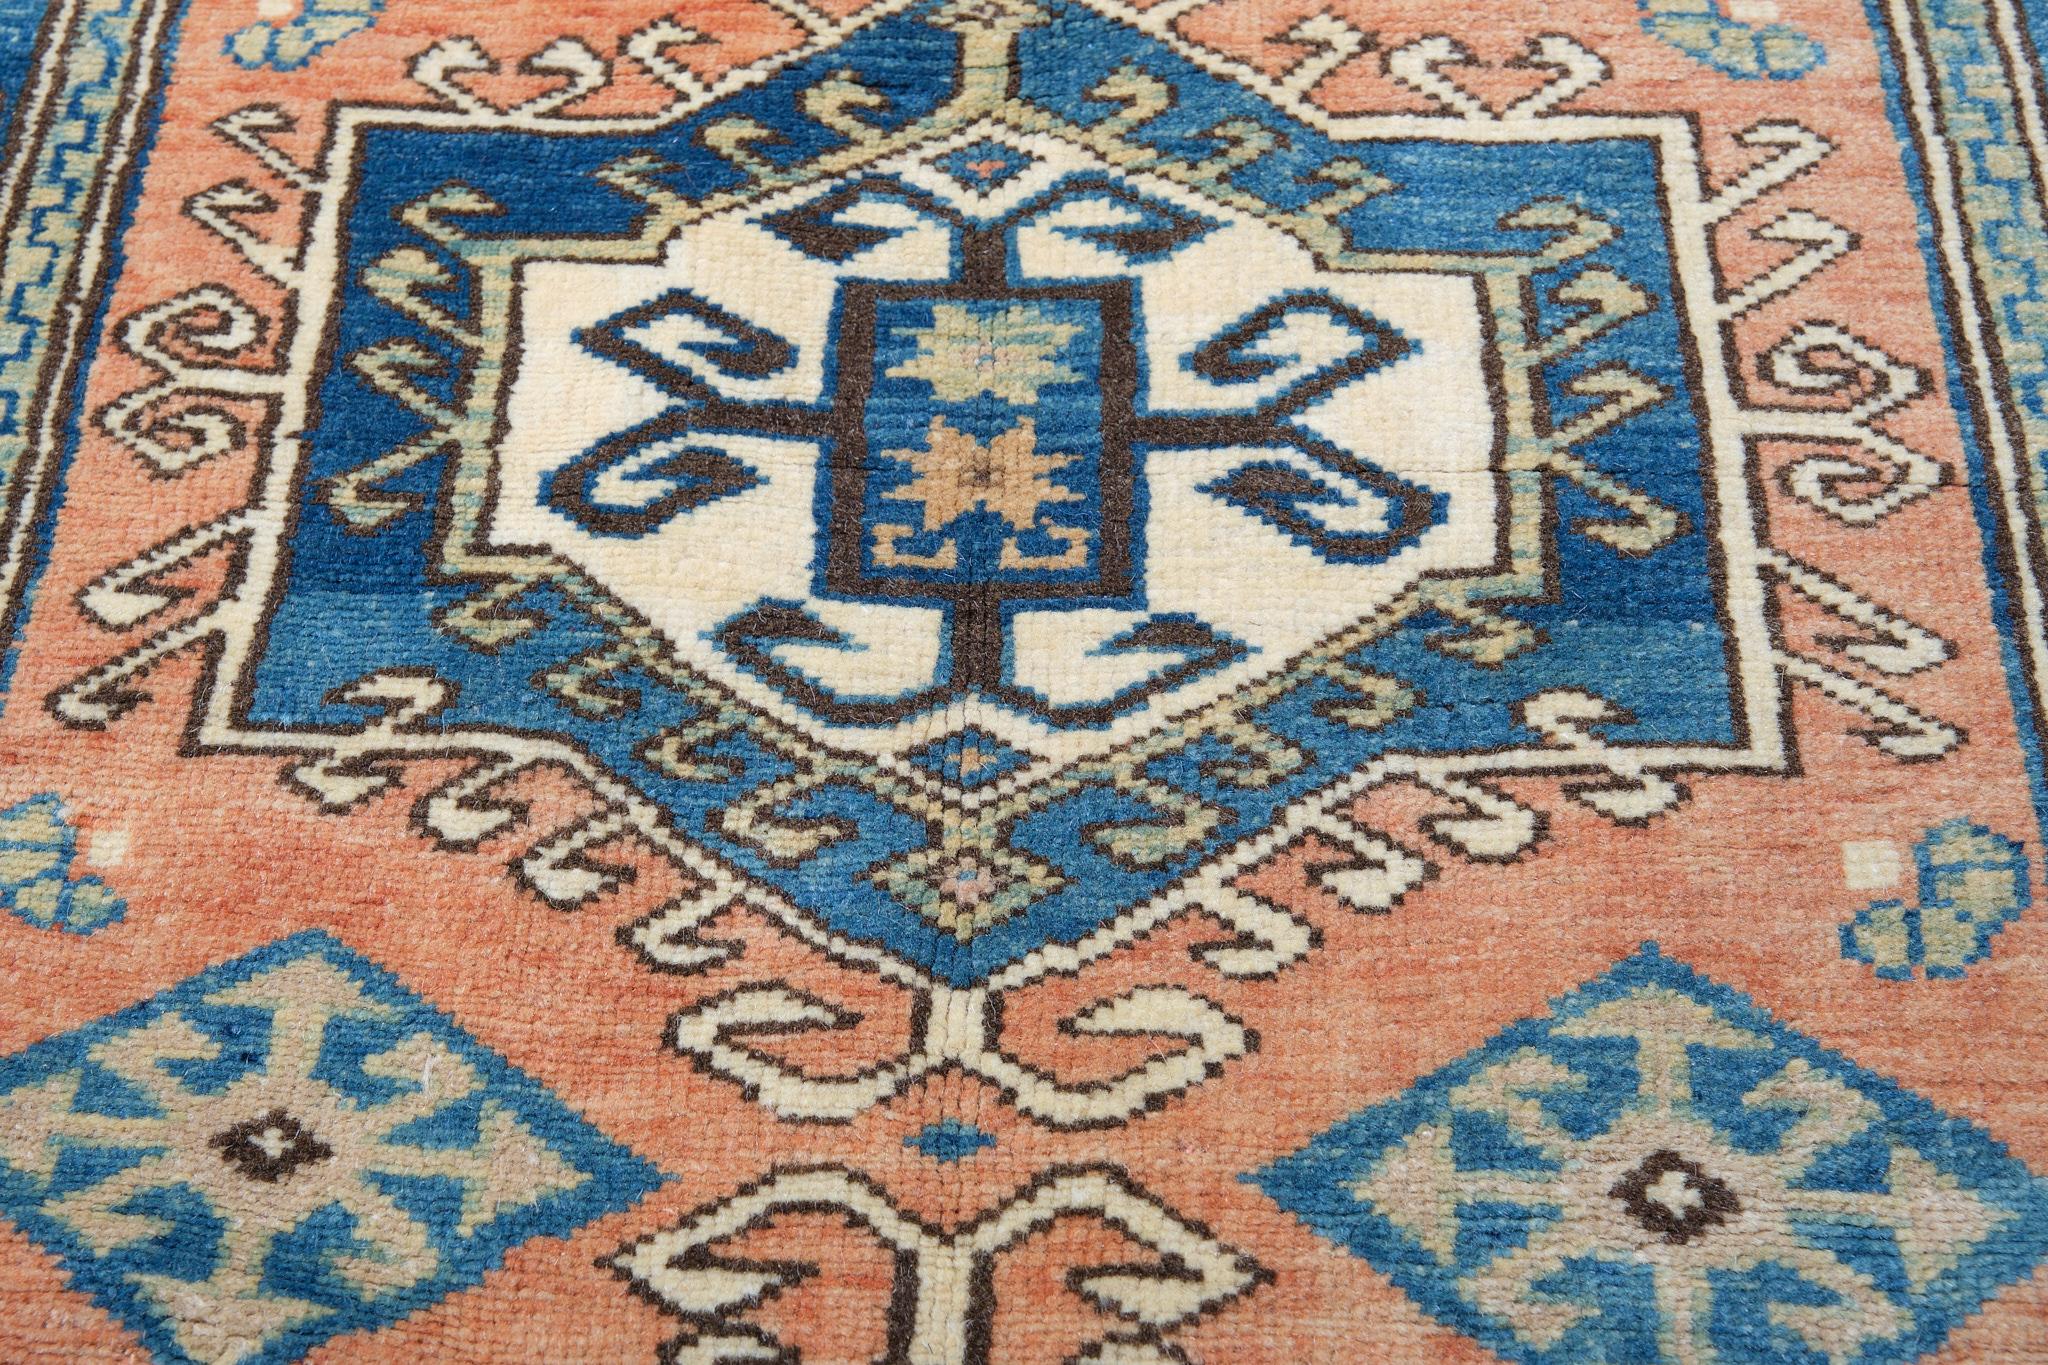 Turkish Ararat Rugs Fachralo Kazak Rug 19th Century Caucasus Revival Carpet Natural Dyed For Sale